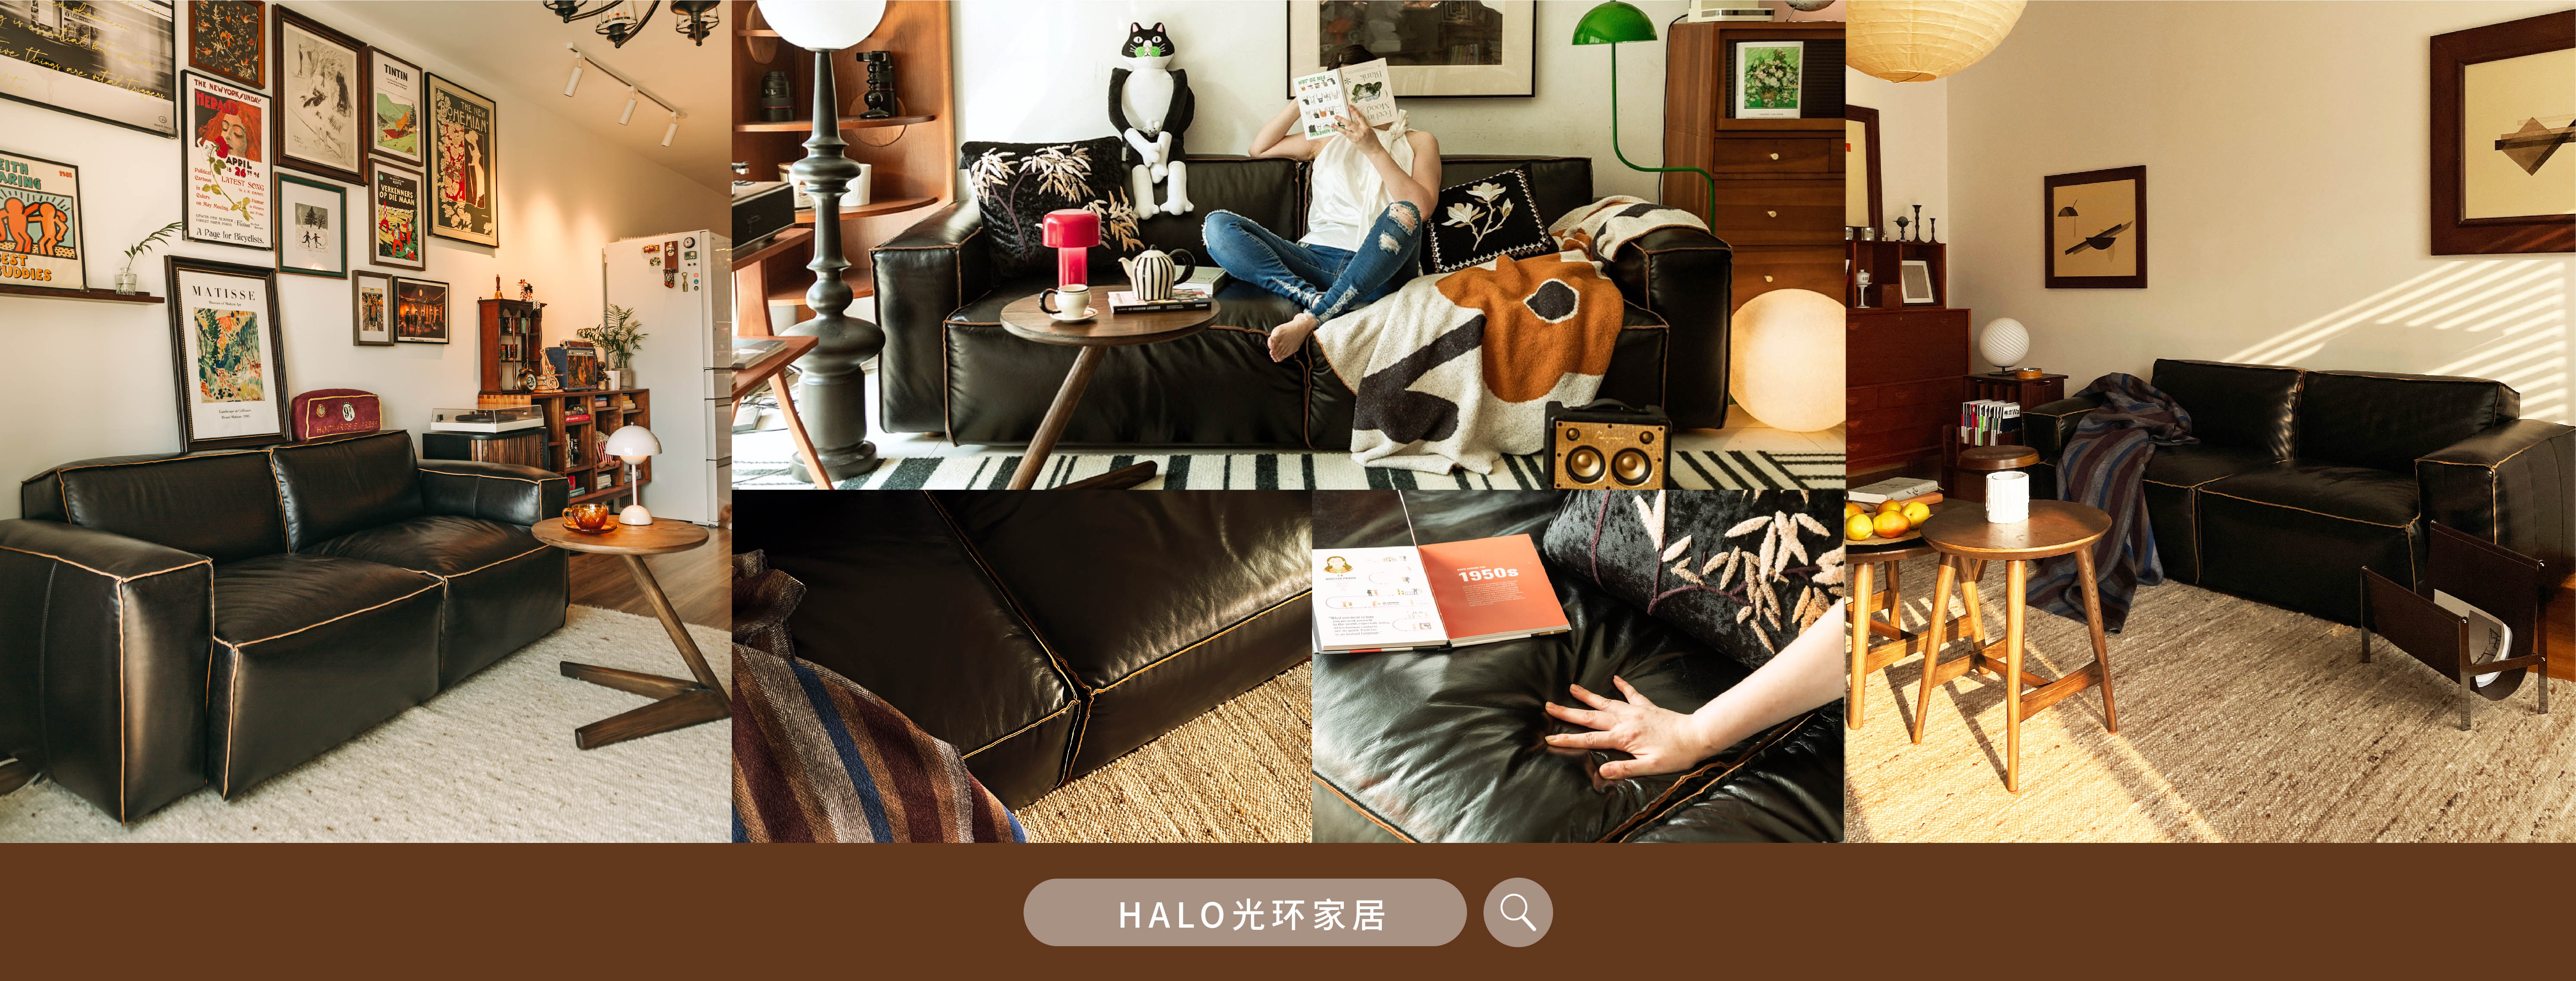 Halo Cross｜HALO X HCK哈士奇携手相互赋能 以舒适感生活美学「叹世界」